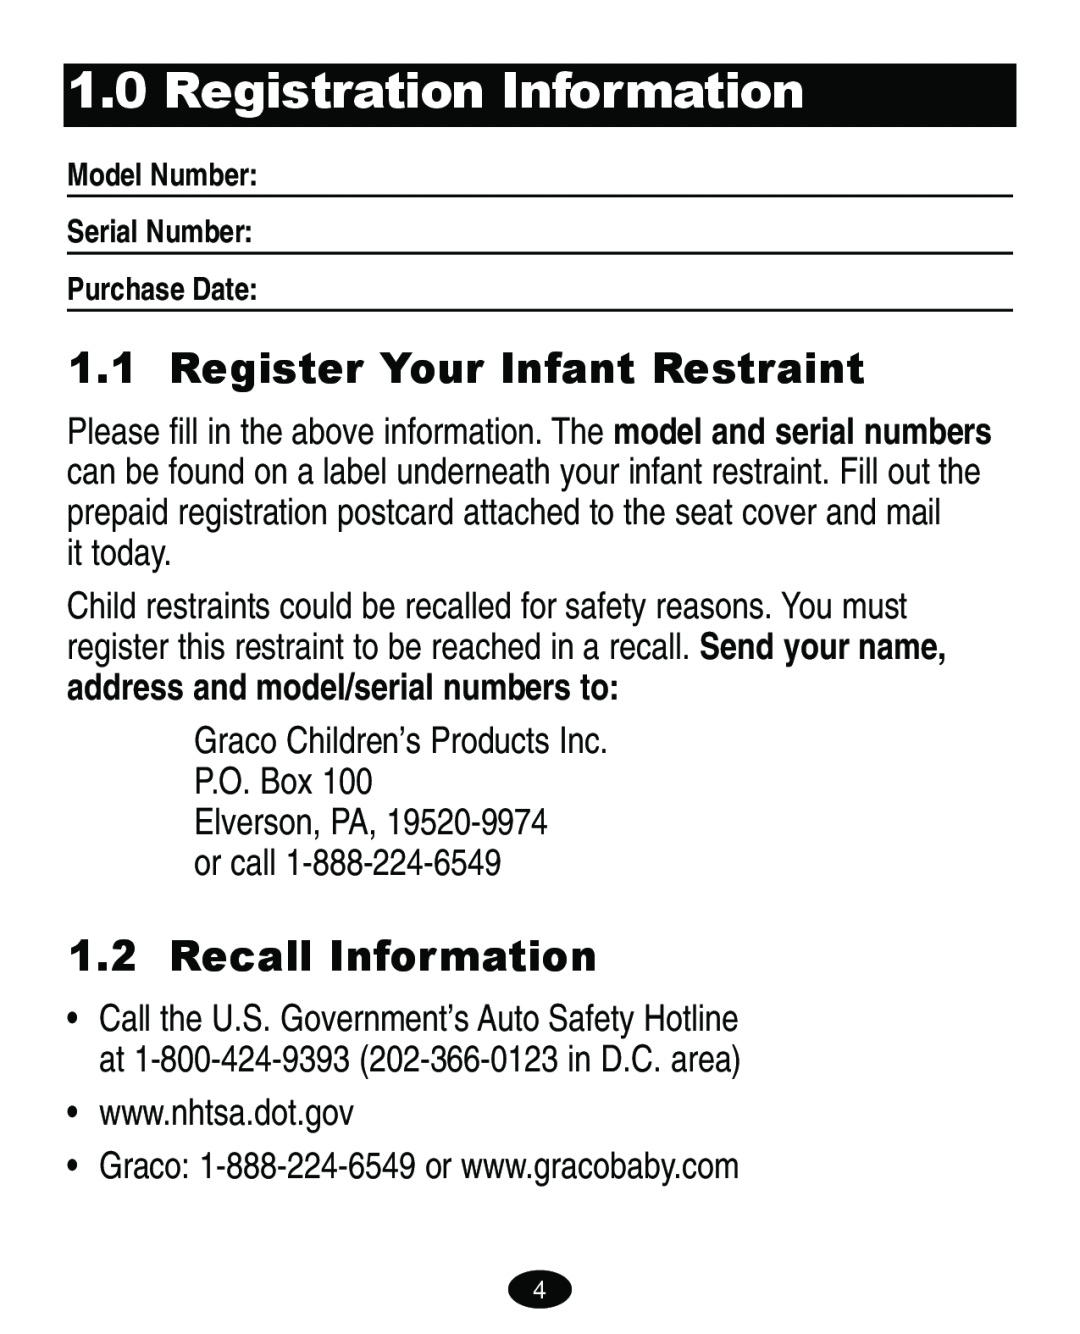 Graco 4460402 manual Registration Information, Register Your Infant Restraint, Recall Information 